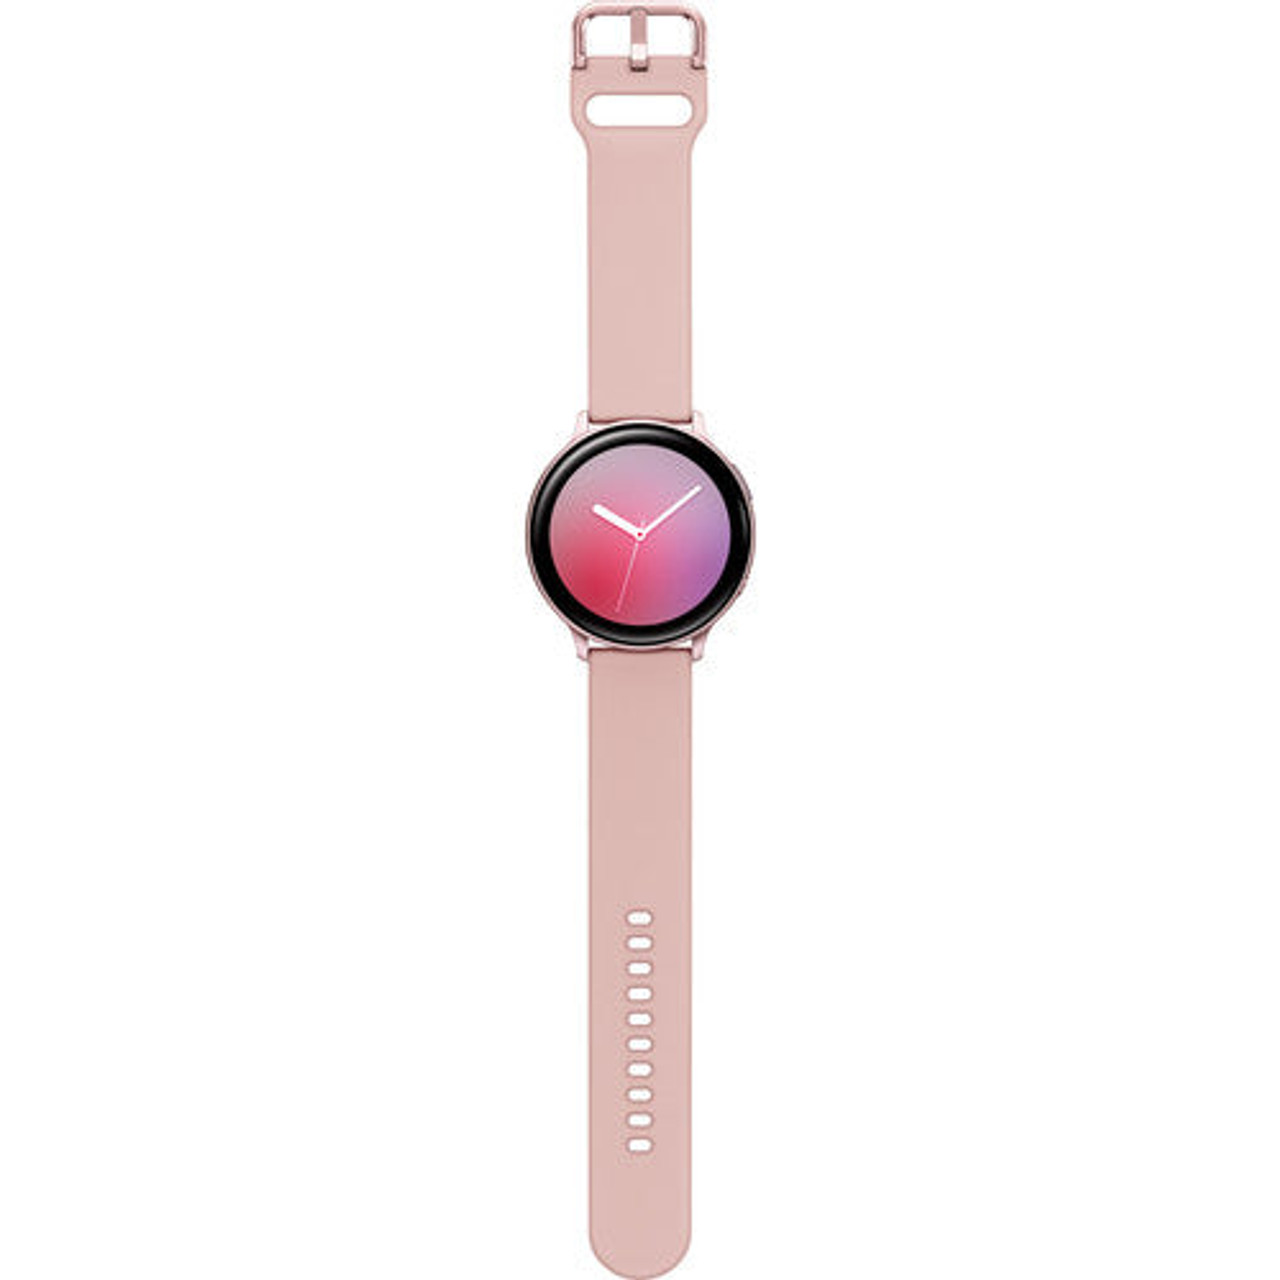 Samsung SM-R830NZDCXAR-RB Galaxy Watch Active 2 40mm Pink -Certified Refurbished